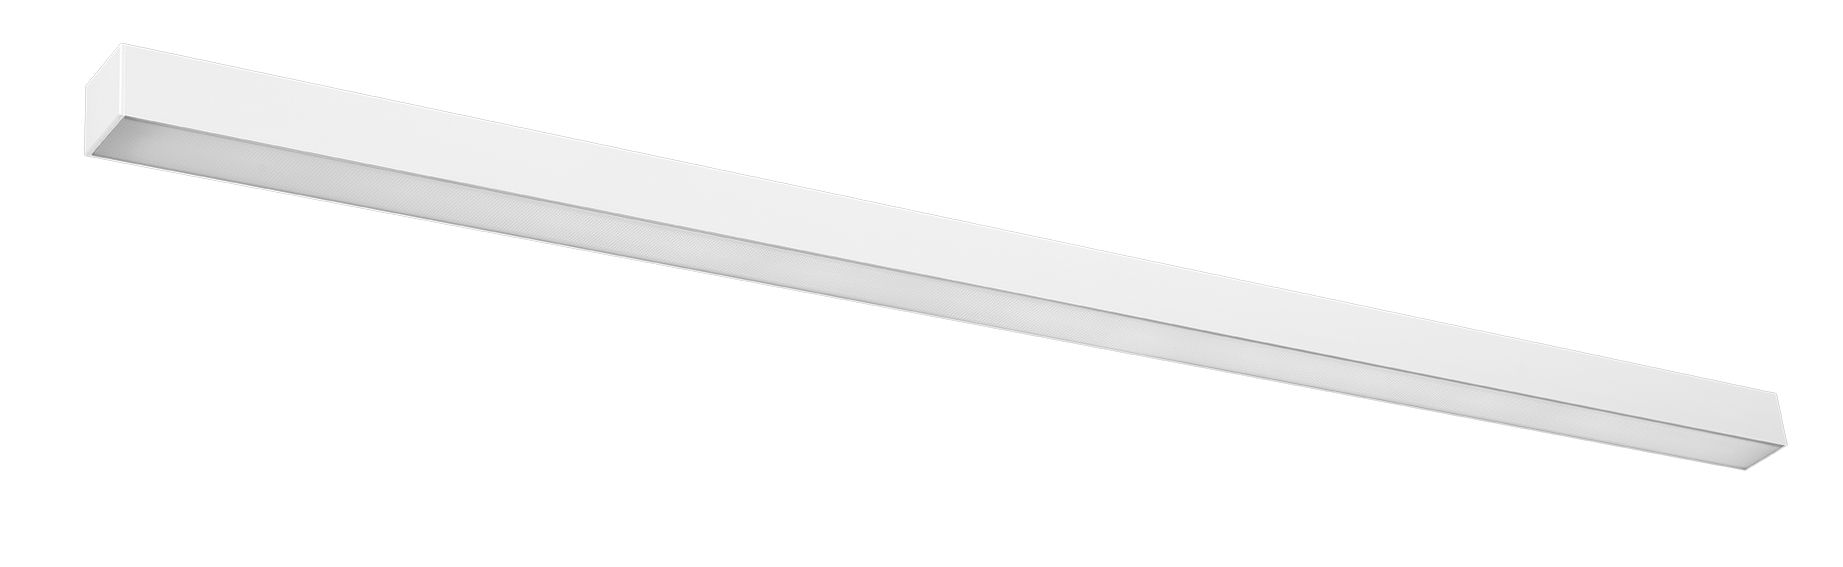 LED Wandleuchte Downlight 150 cm lang 4000 K 4940 lm Weiß